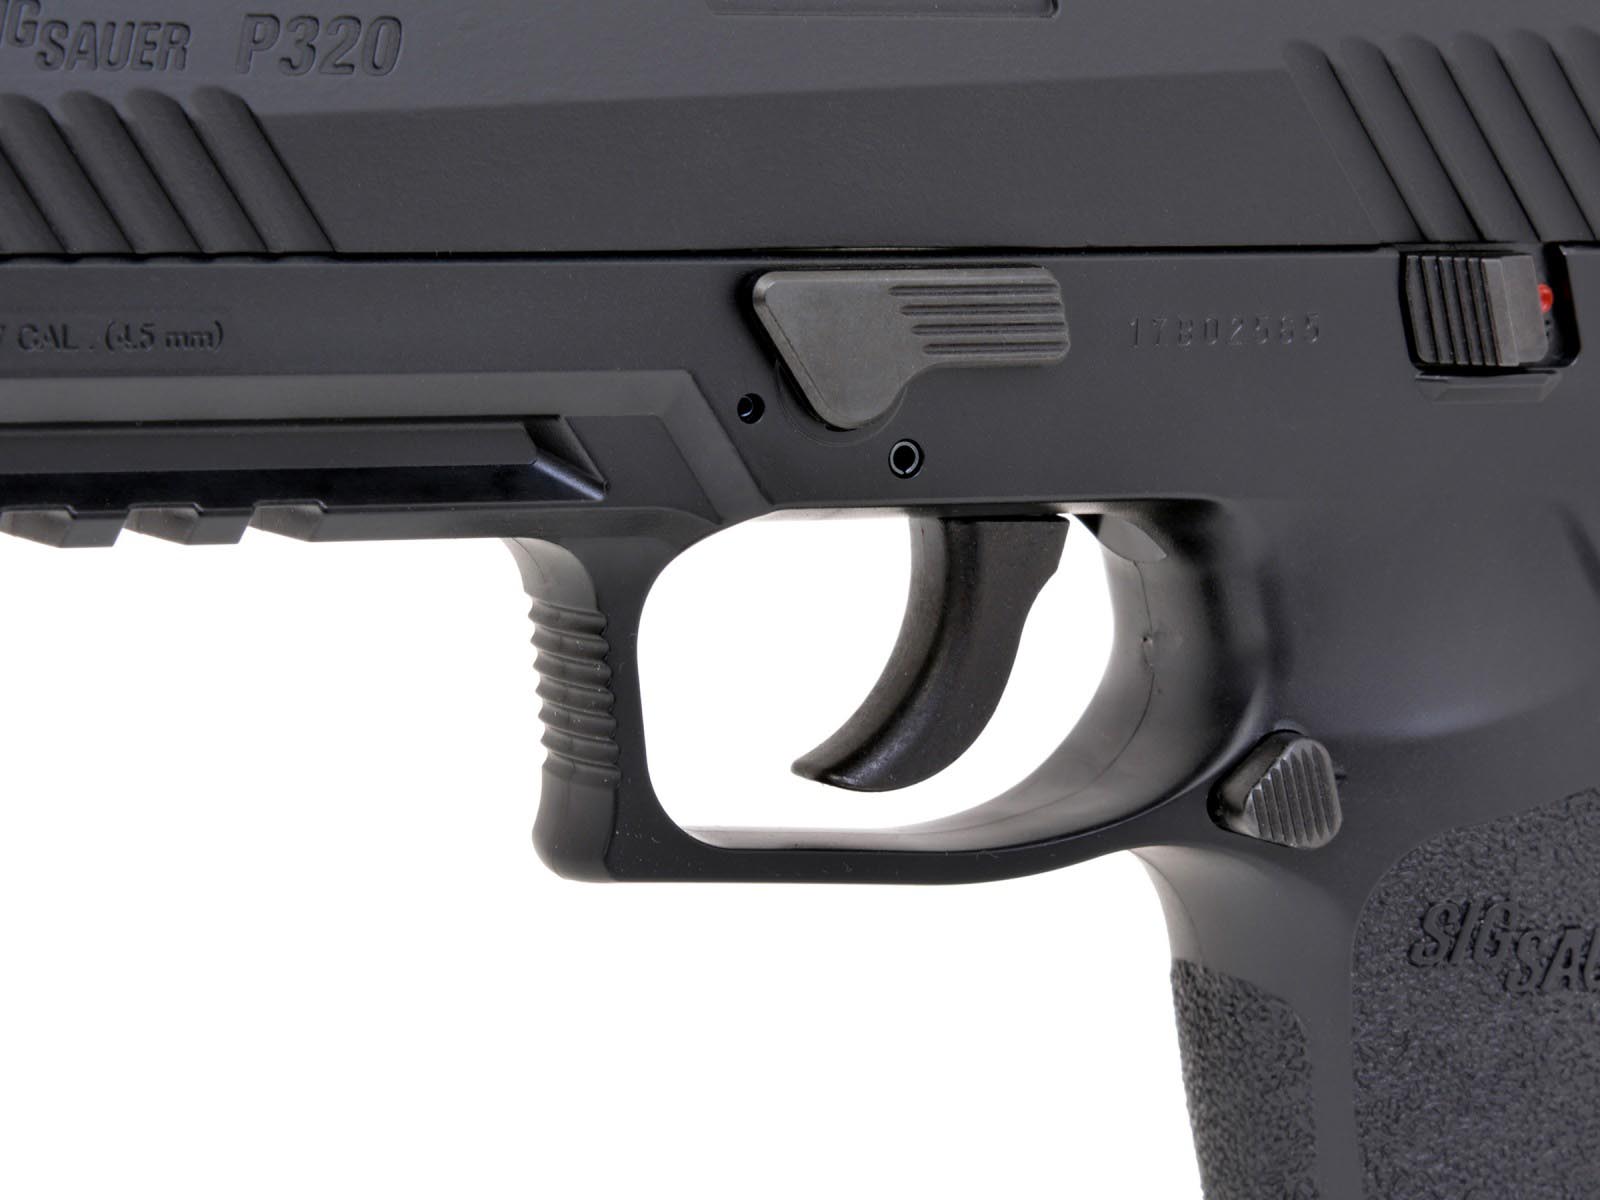 Sig Sauer P320 ASP Co2 Pistol 20 Round Magazine Black 2 PA for sale online 